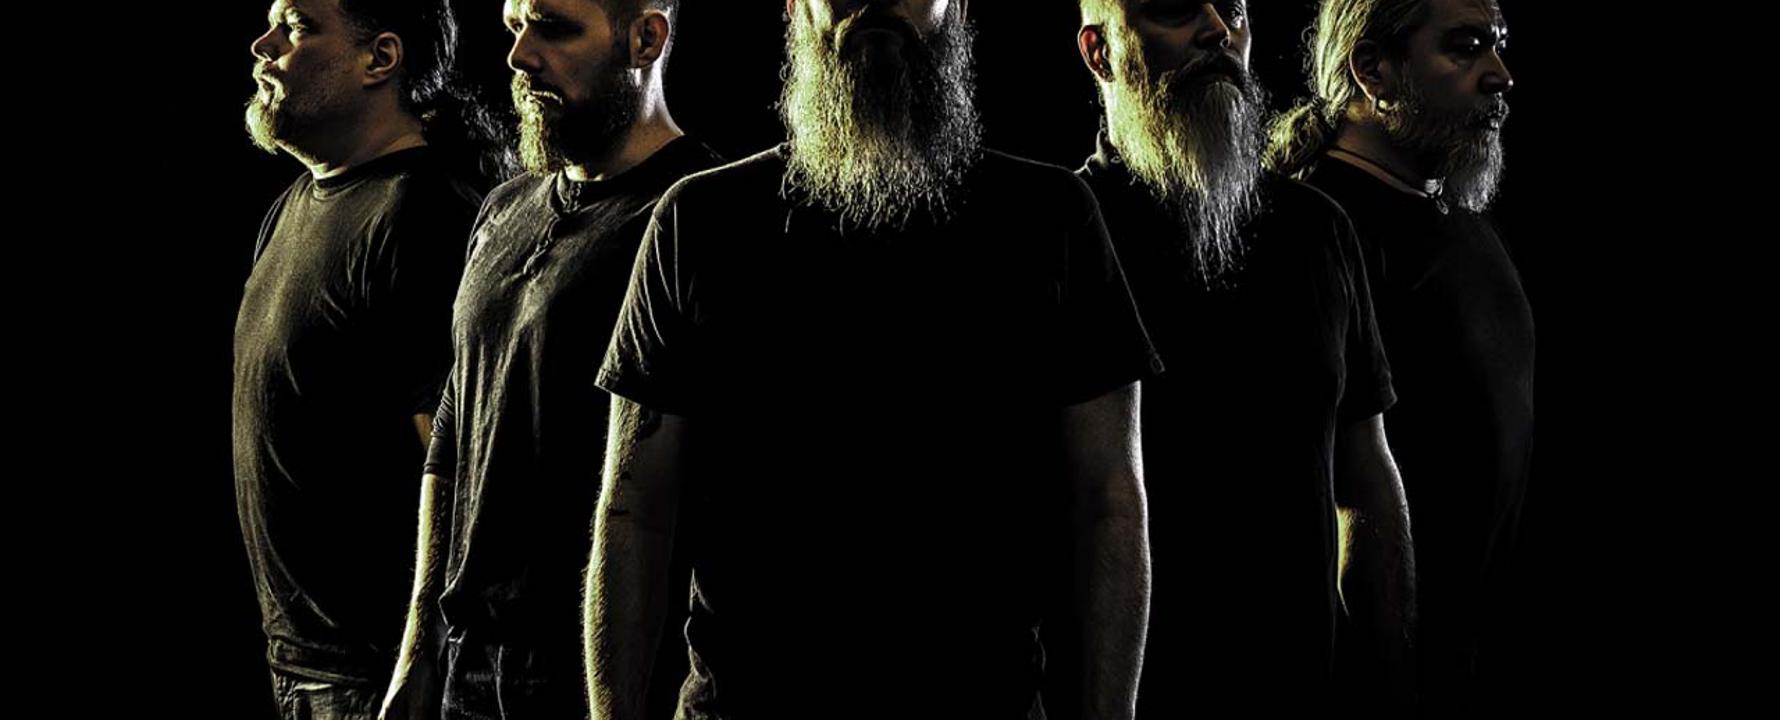 Promotional photograph of Meshuggah.